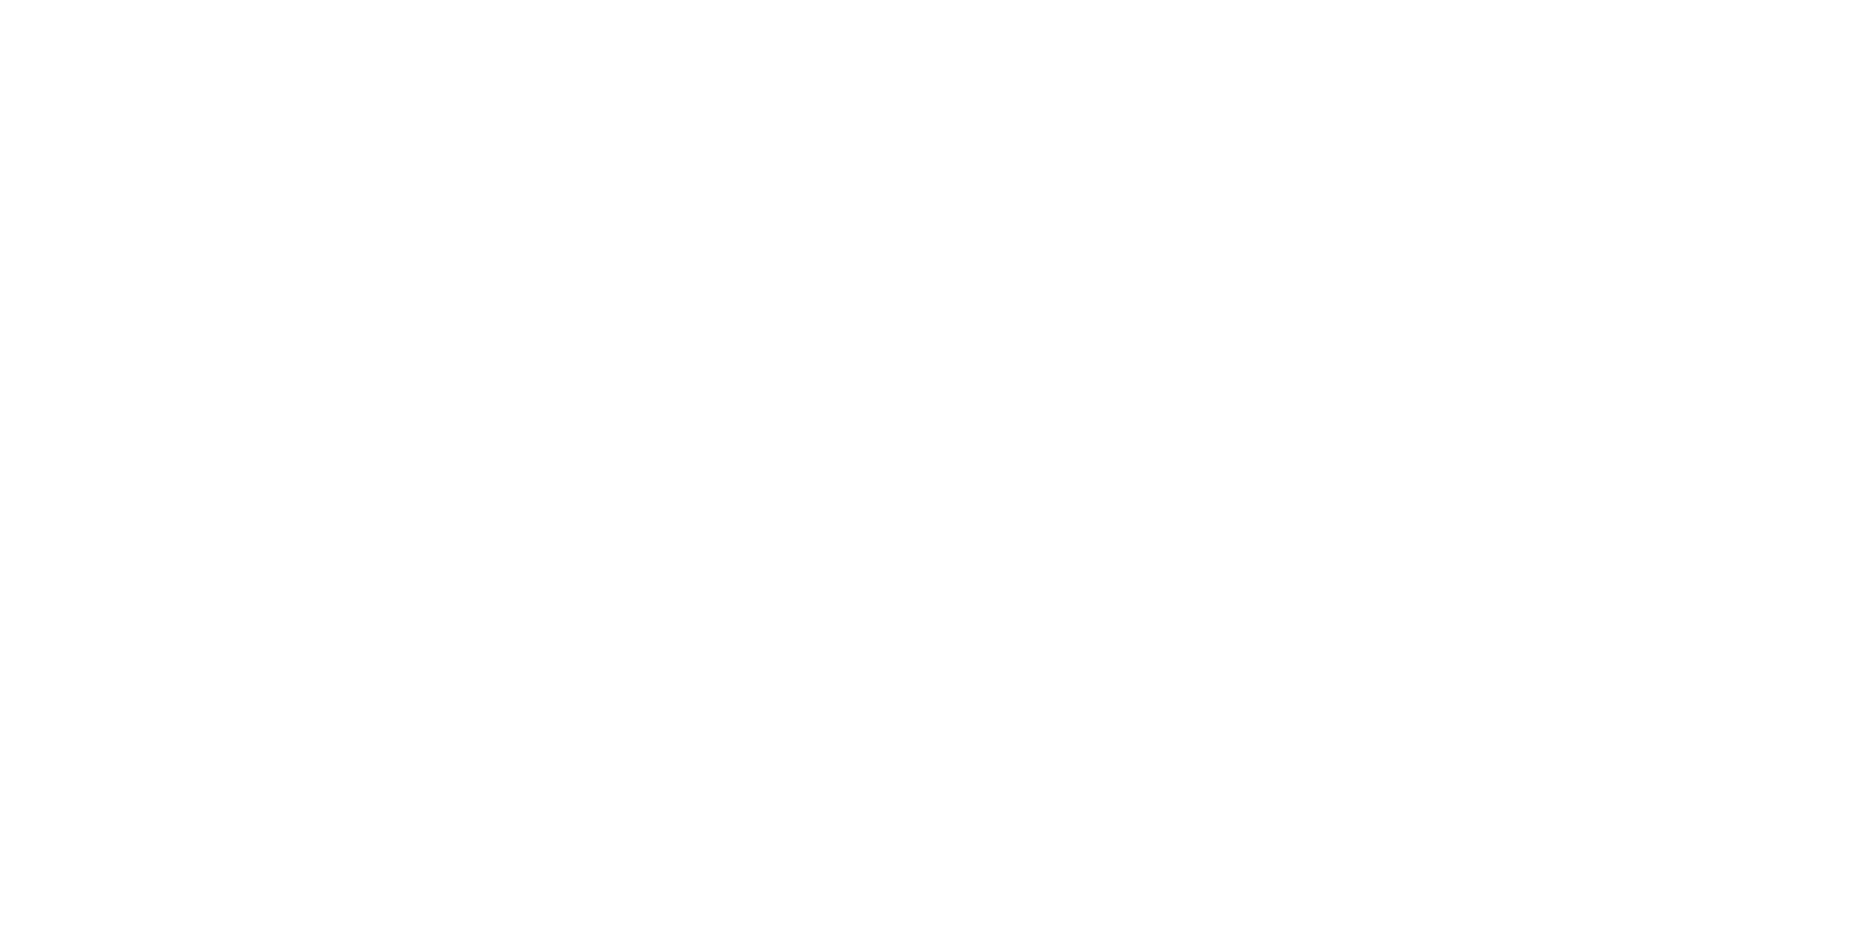 The Dental Marketer